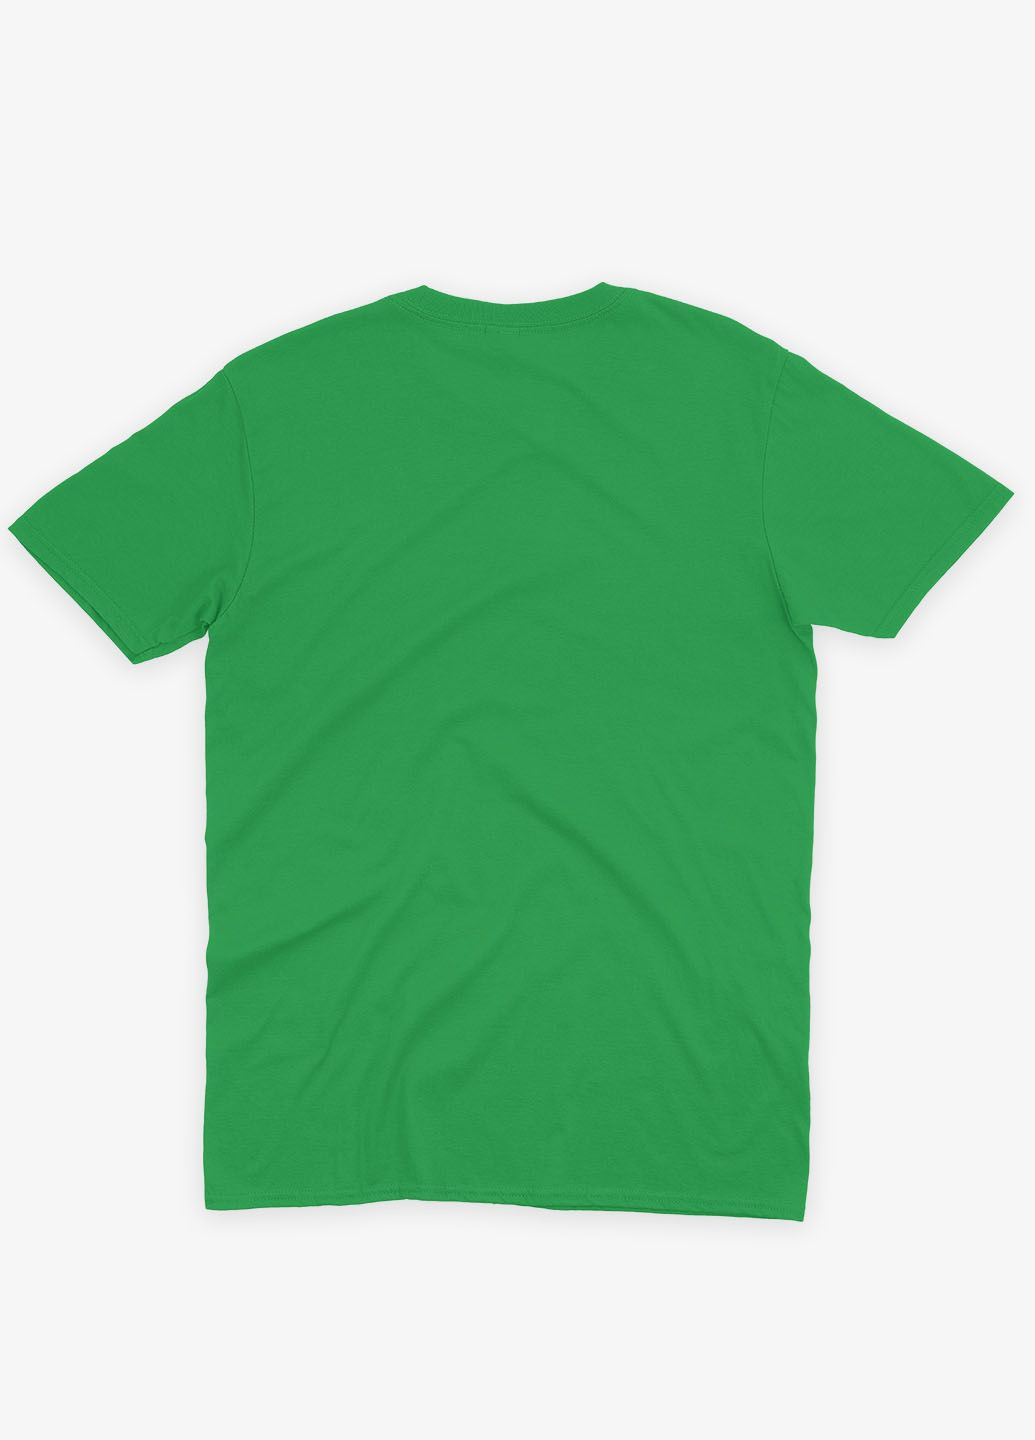 Зеленая демисезонная футболка для мальчика с принтом антигероя - дедпул (ts001-1-keg-006-015-023-b) Modno